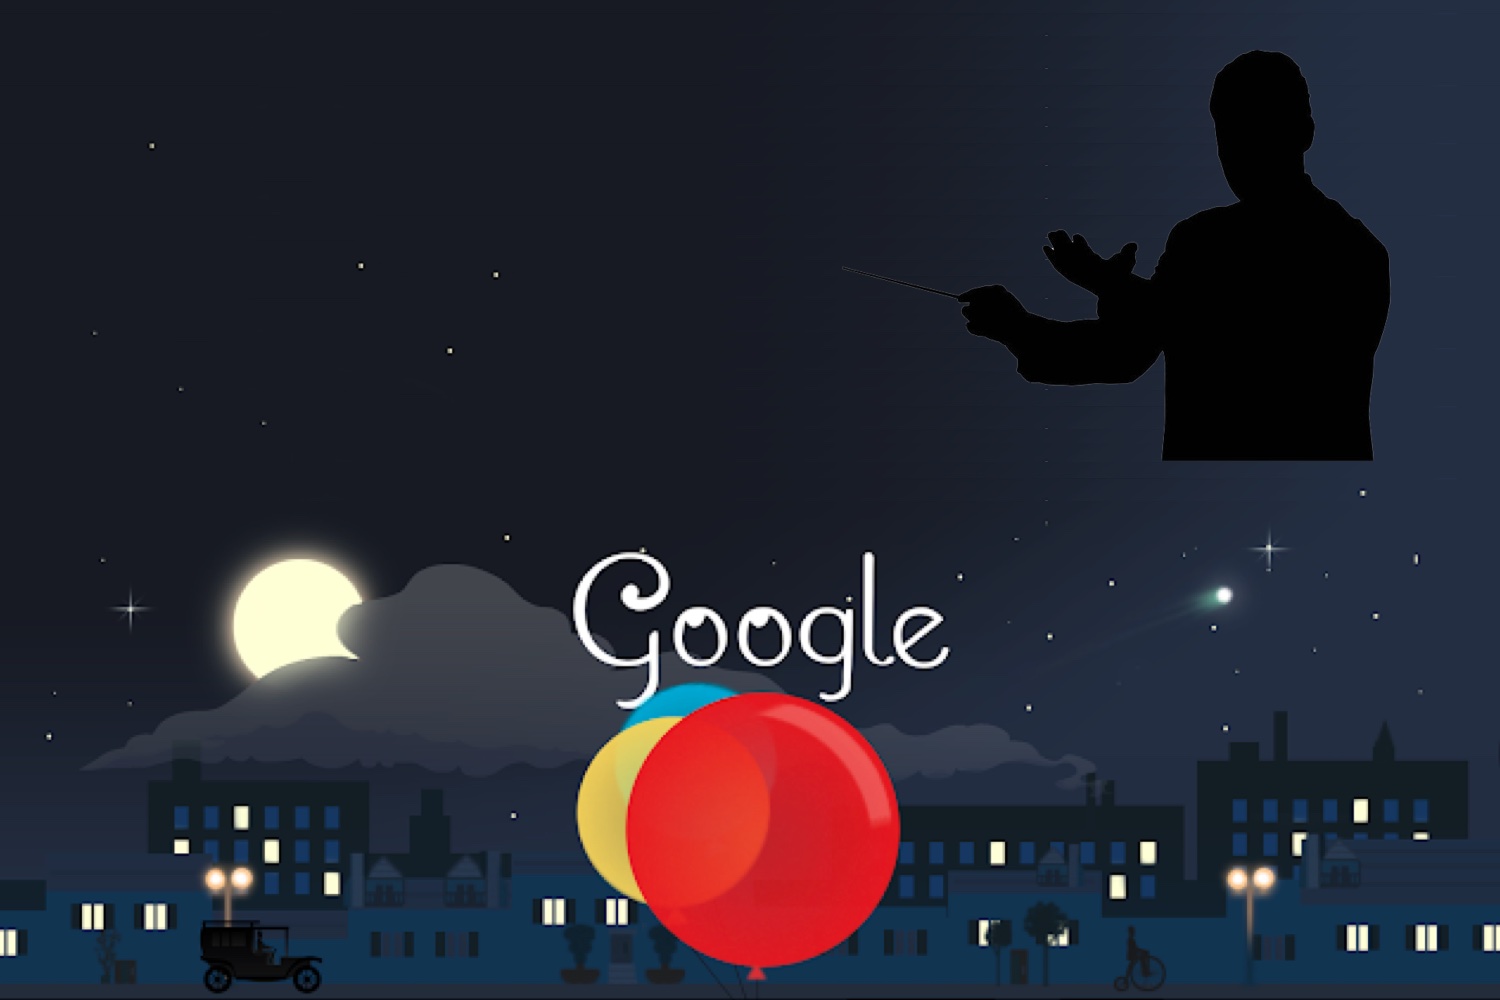 Google Doodle Claude Debussy, debussy google doodle